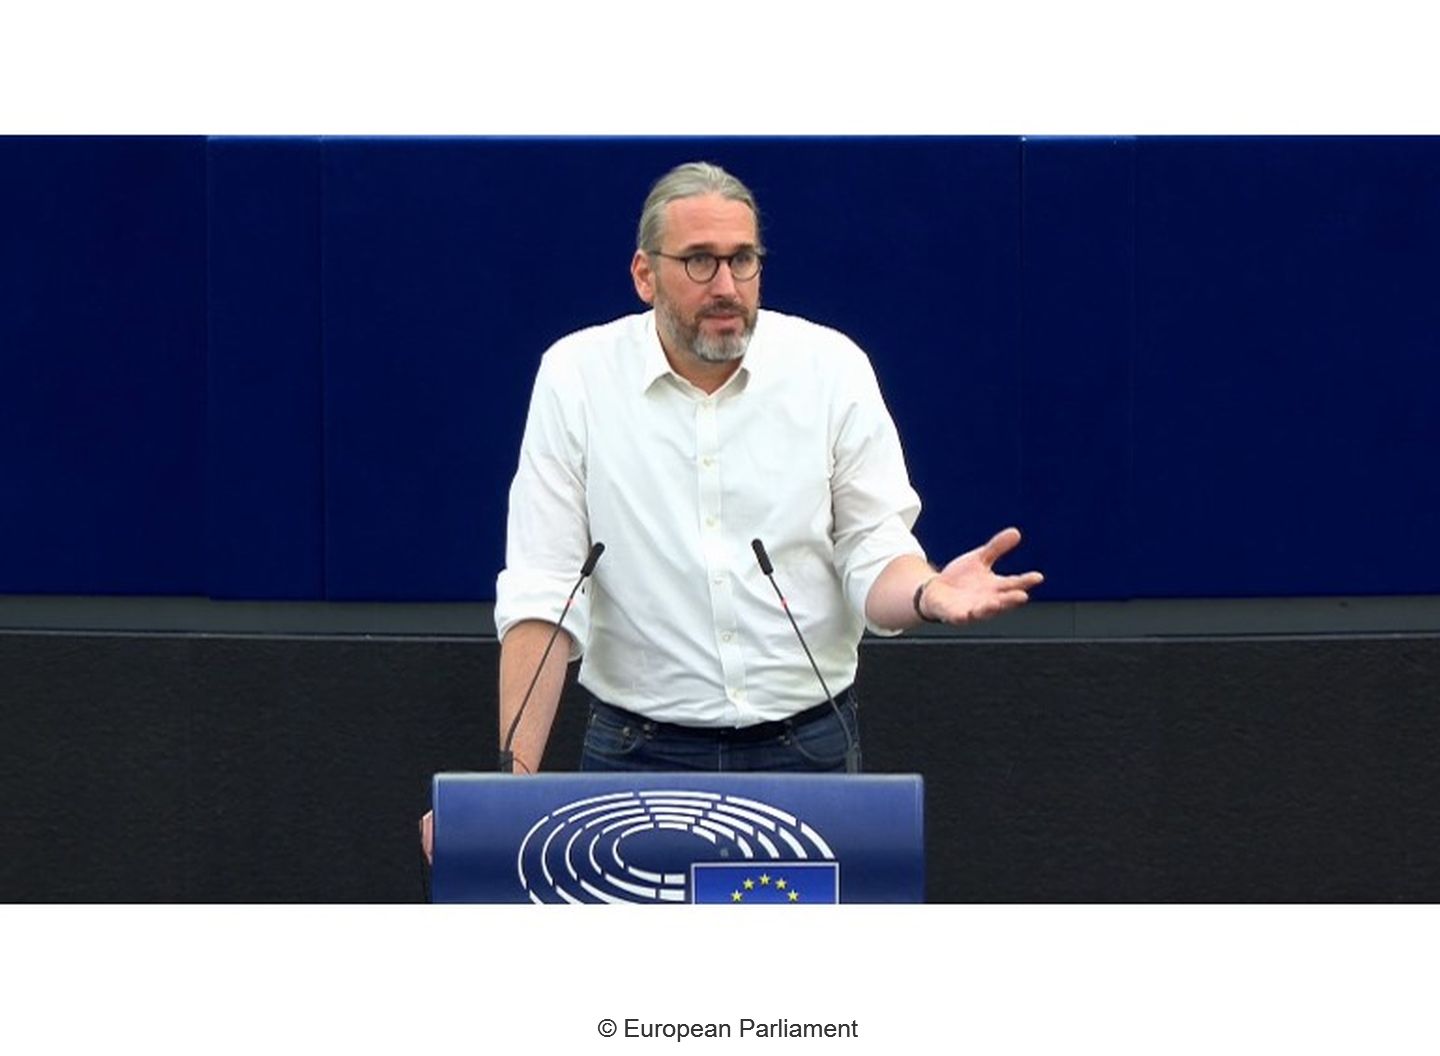 Rapporteur Martin Hojsík addressing the plenary session of the EU Parliament.